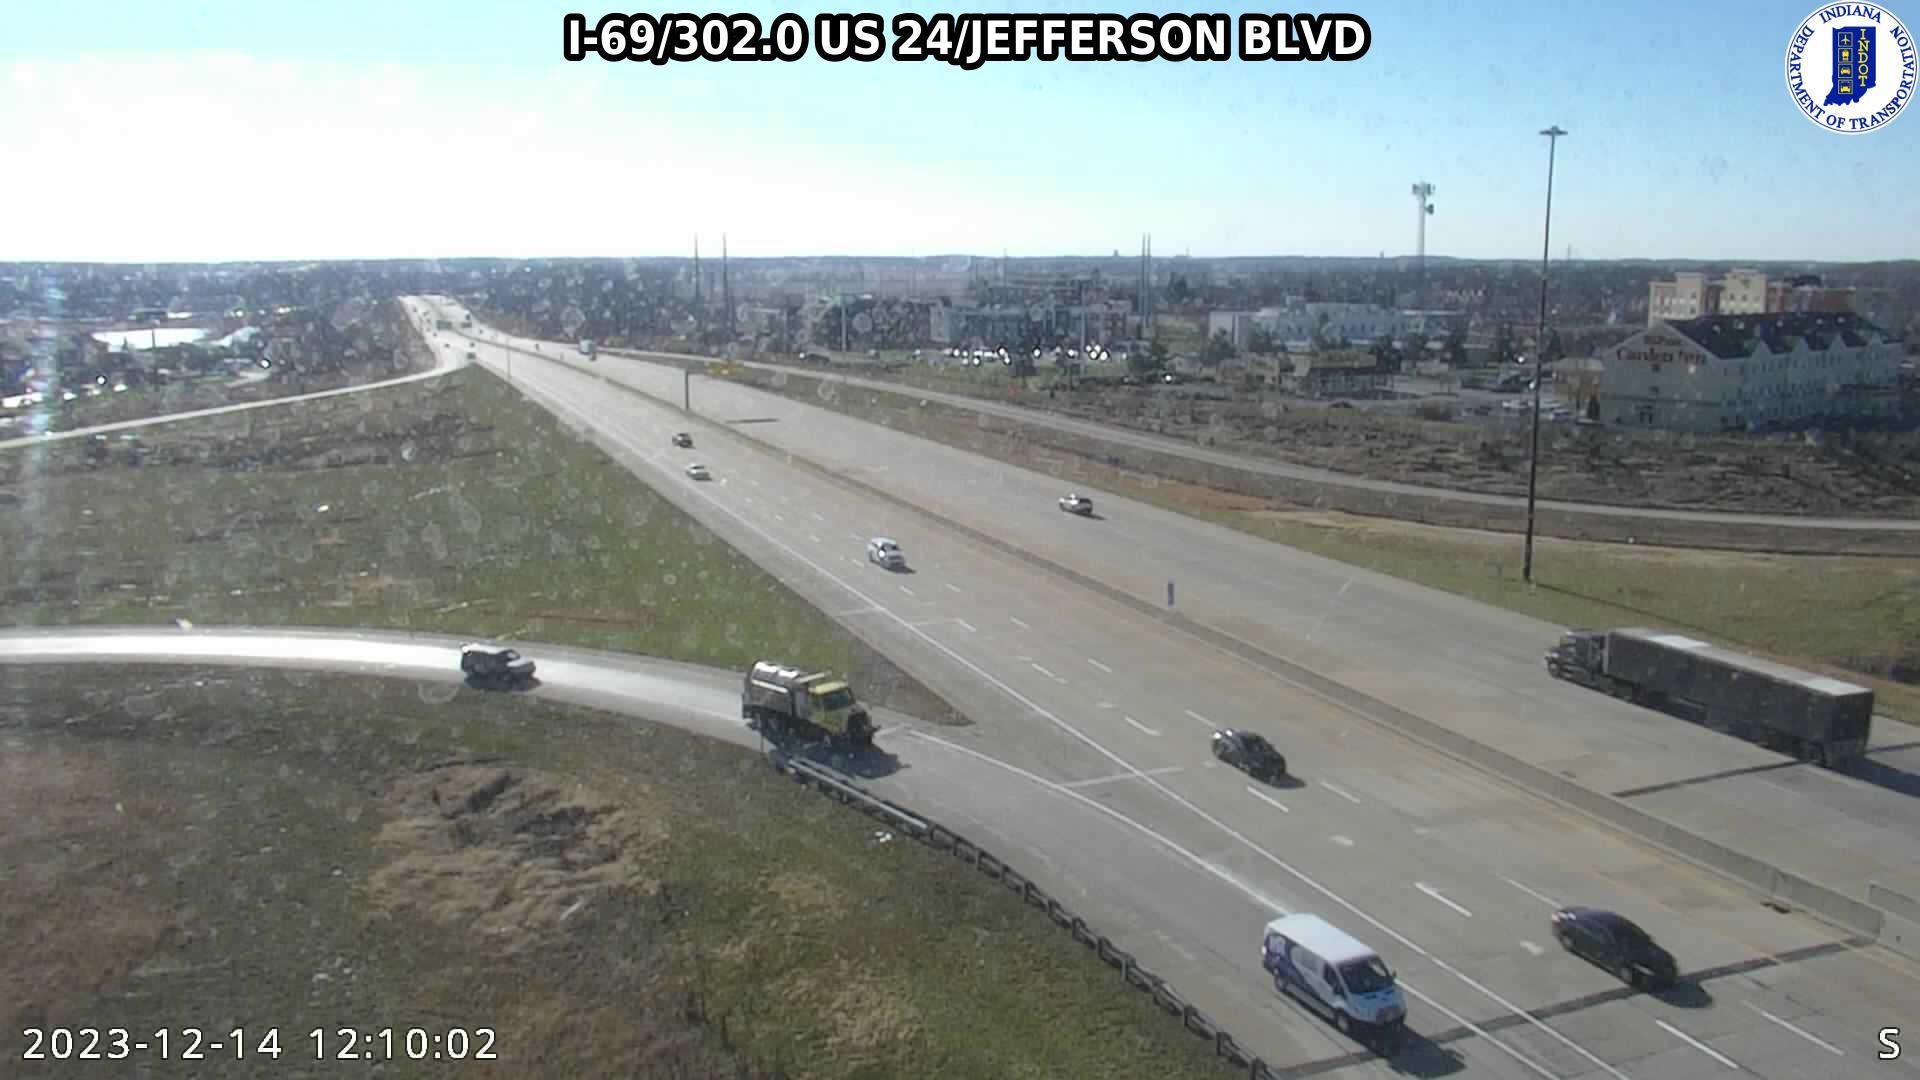 Traffic Cam Fort Wayne: I-69: I-69/302.0 US 24/JEFFERSON BLVD Player